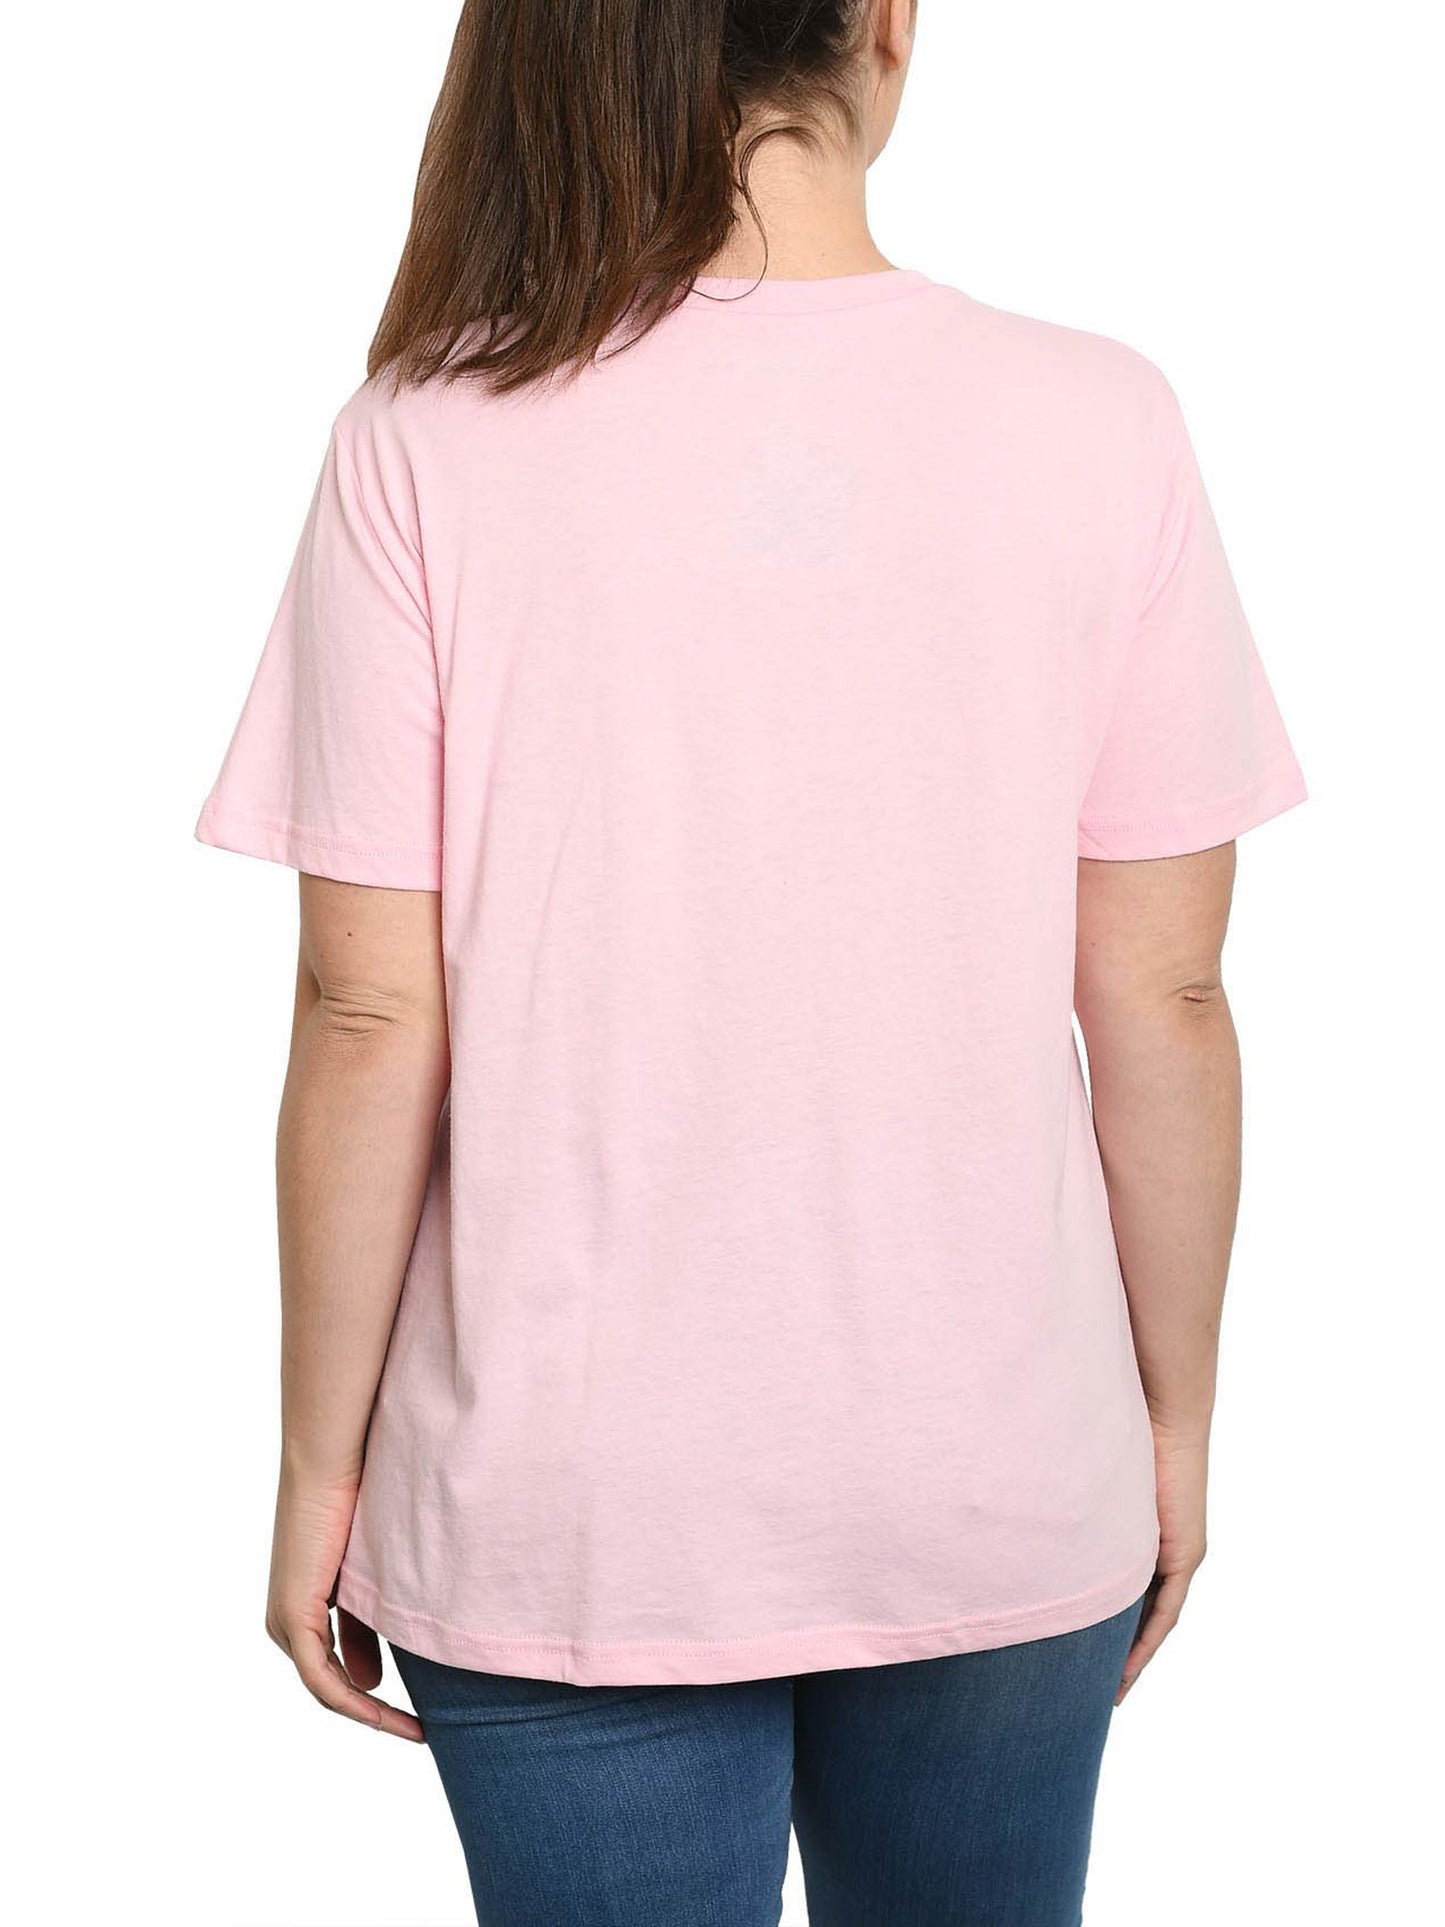 Disney Cheshire Cat Alice in Wonderland T-Shirt Pink Women's Plus Size